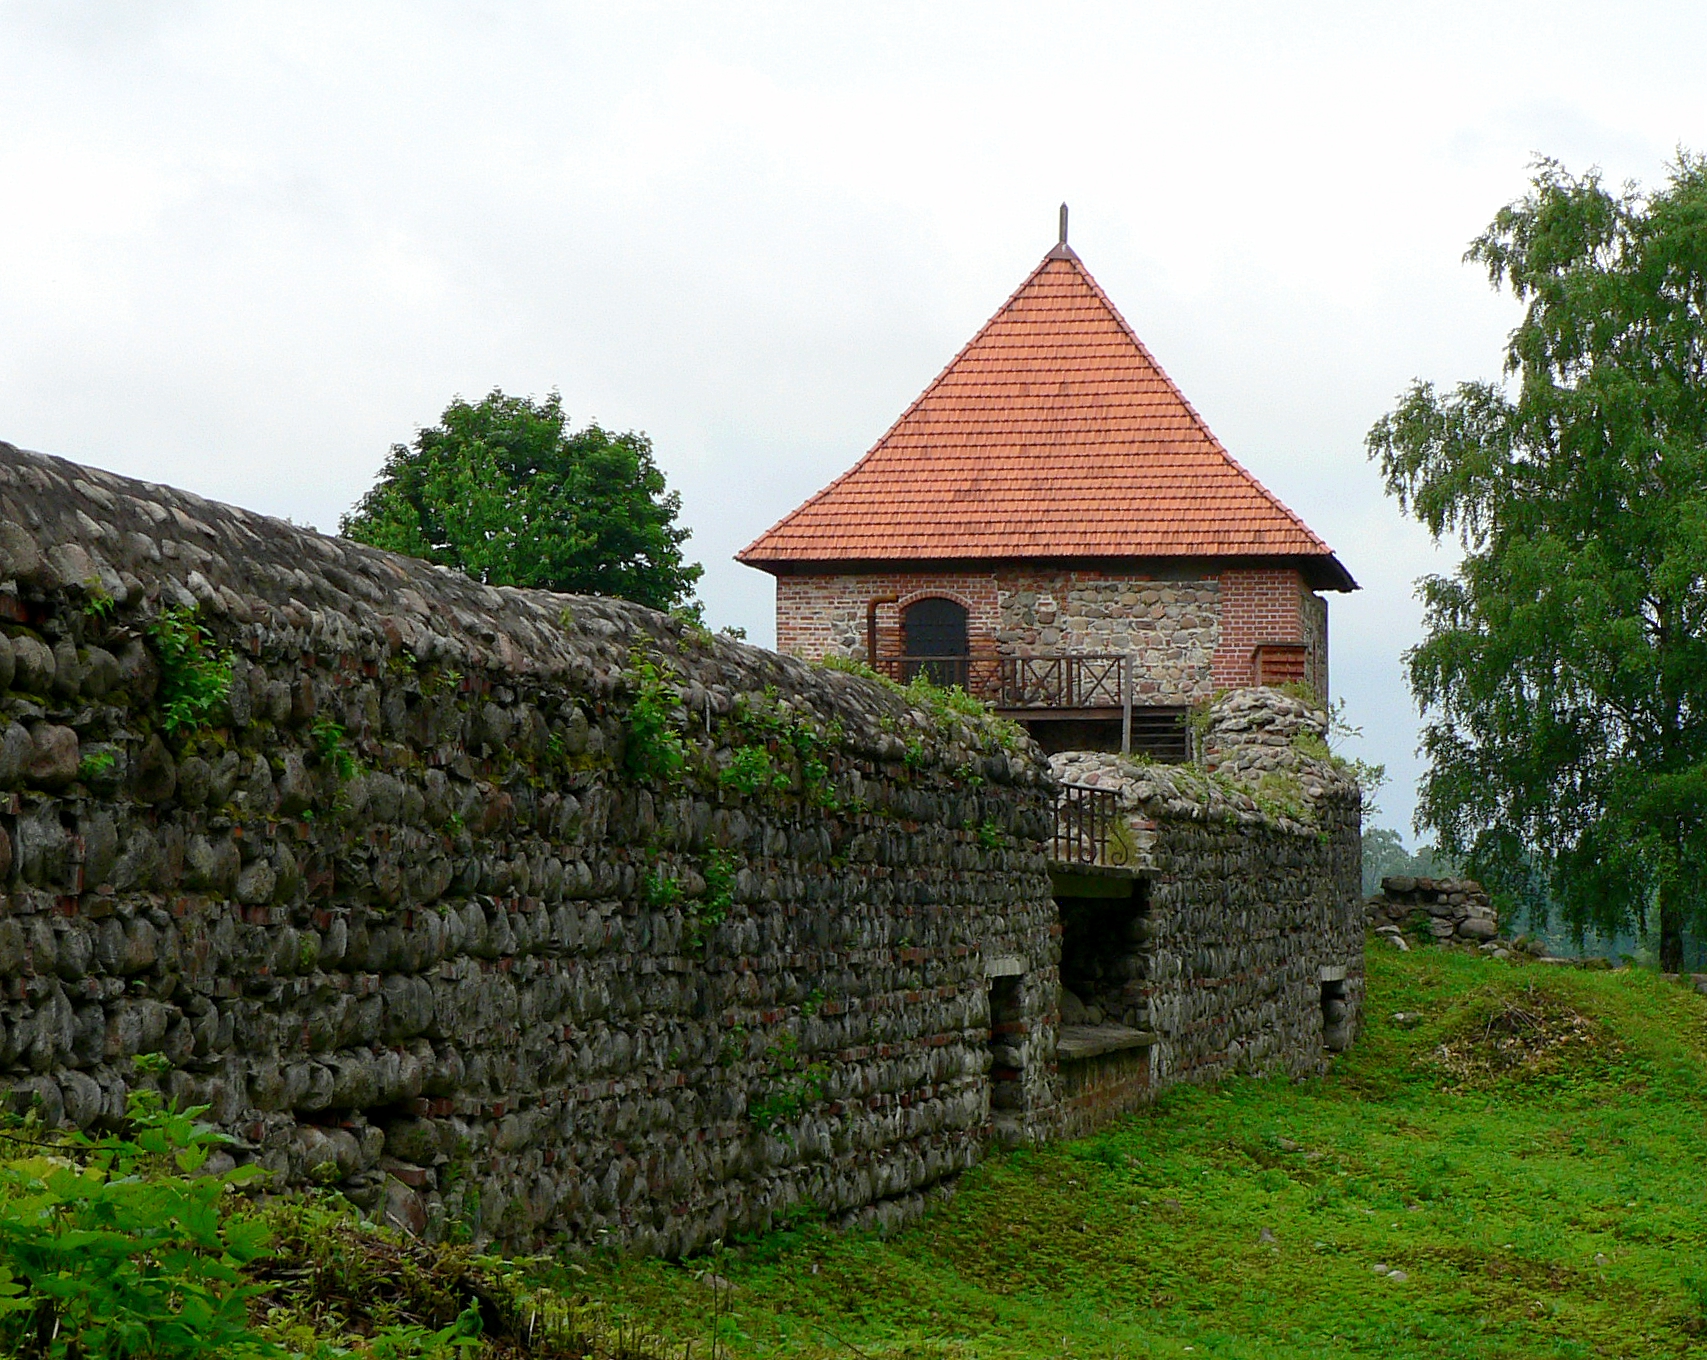 File:Trakai old castle.jpg - Wikimedia Commons